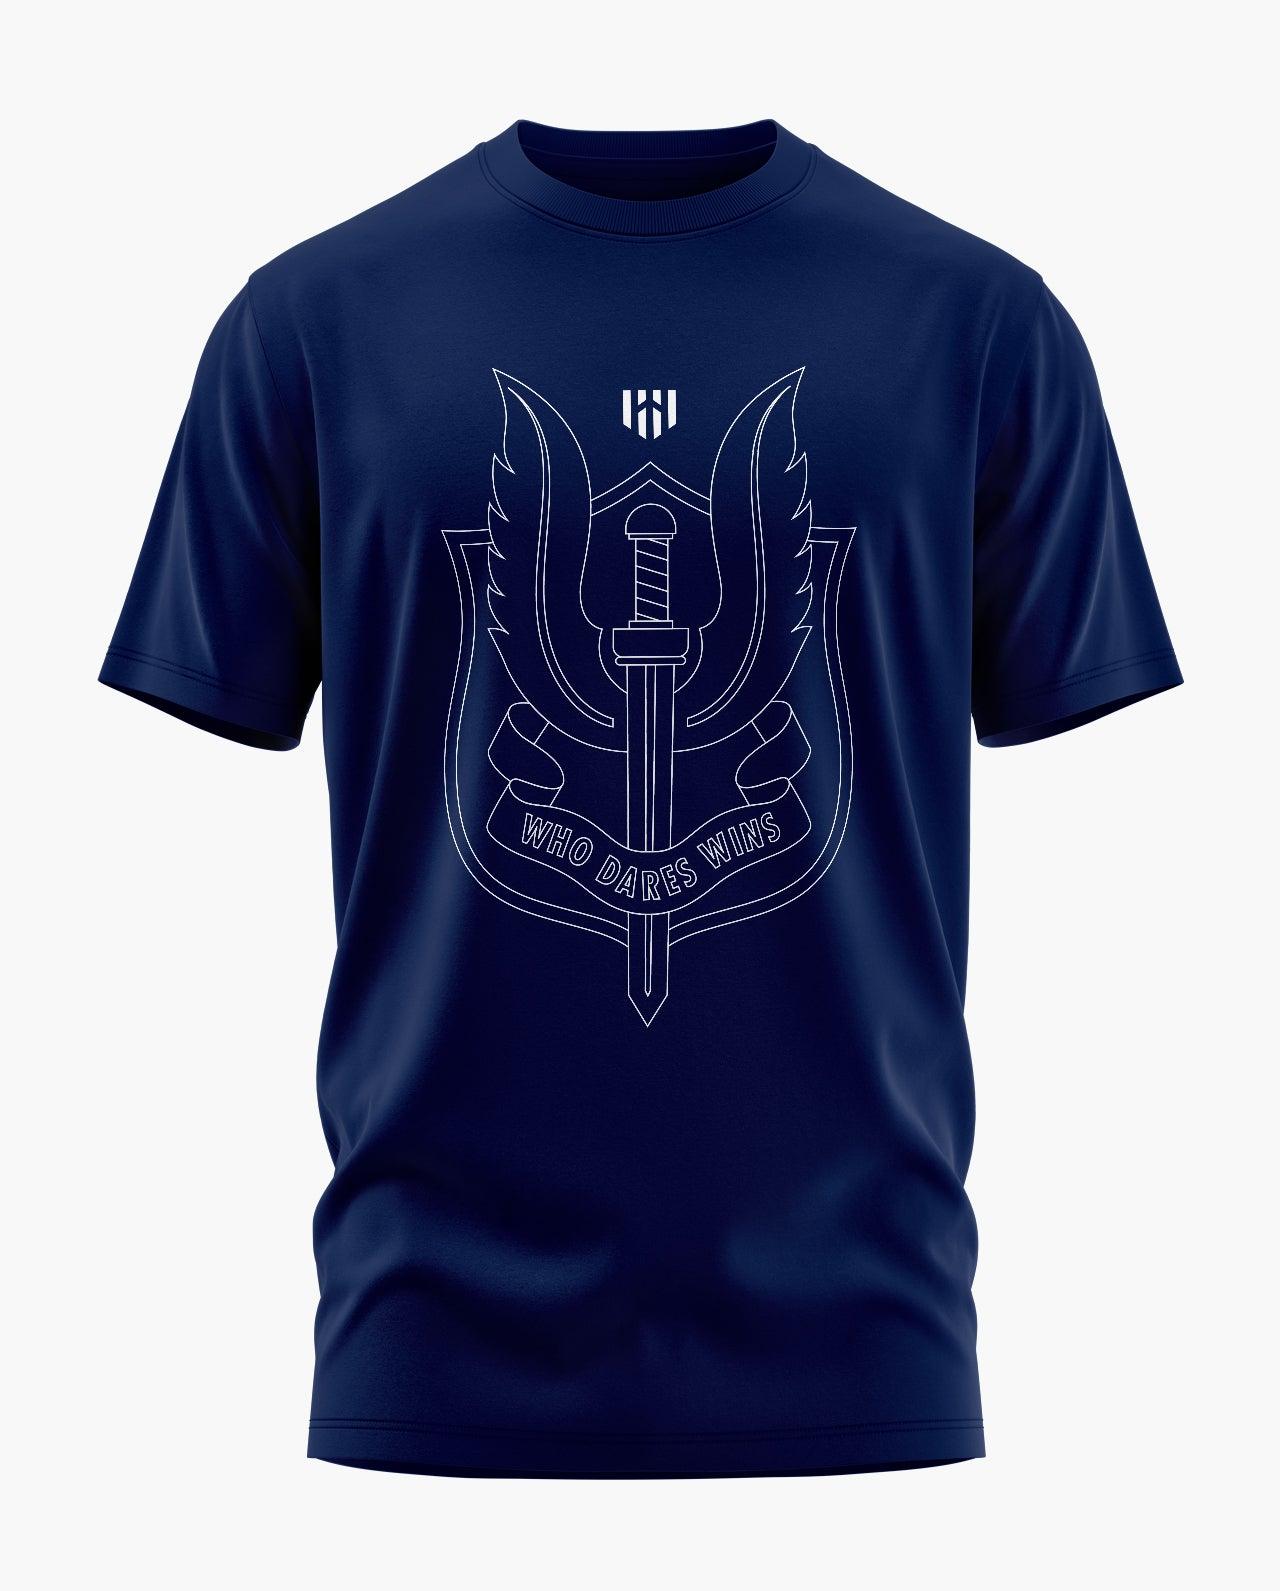 THE PARAS T-Shirt - Aero Armour